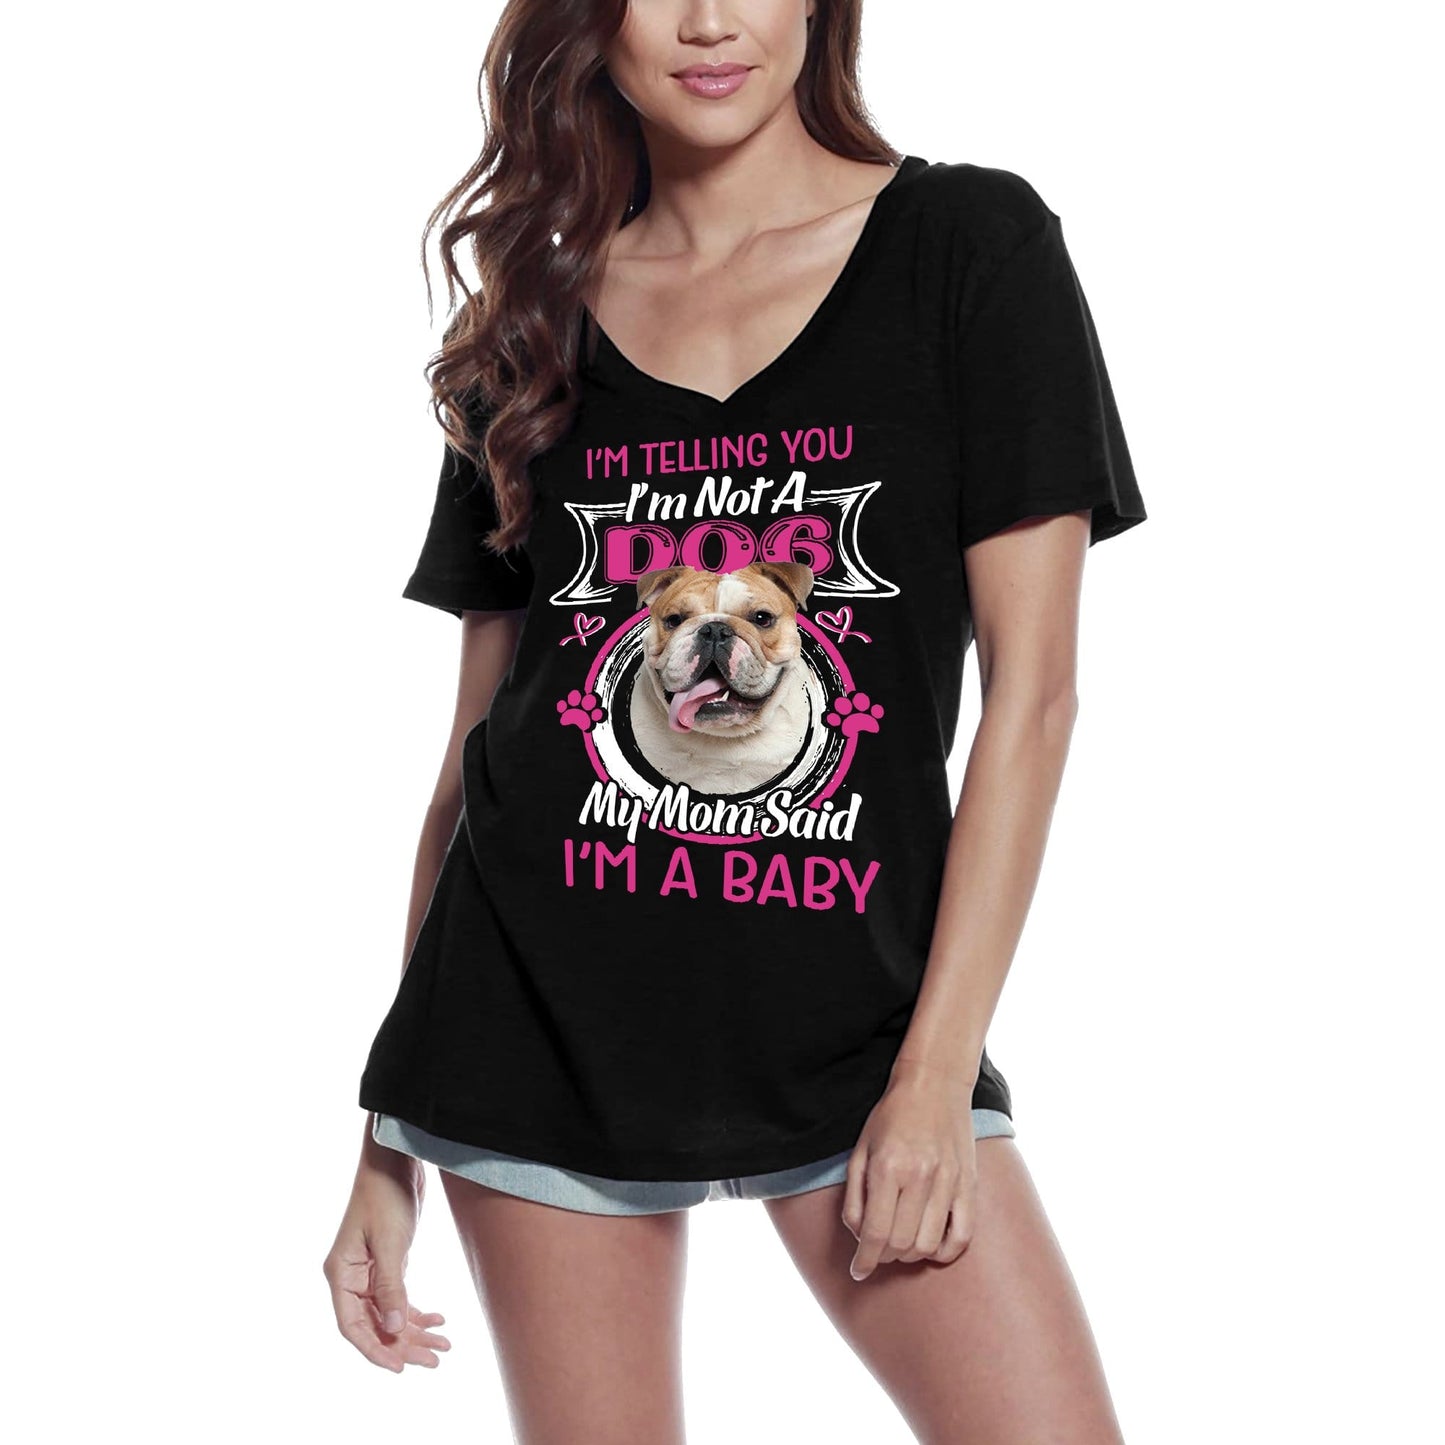 ULTRABASIC Women's T-Shirt I'm Telling You I'm Not a English Bulldog - My Mom Said I'm a Baby - Cute Puppy Dog Lover Tee Shirt